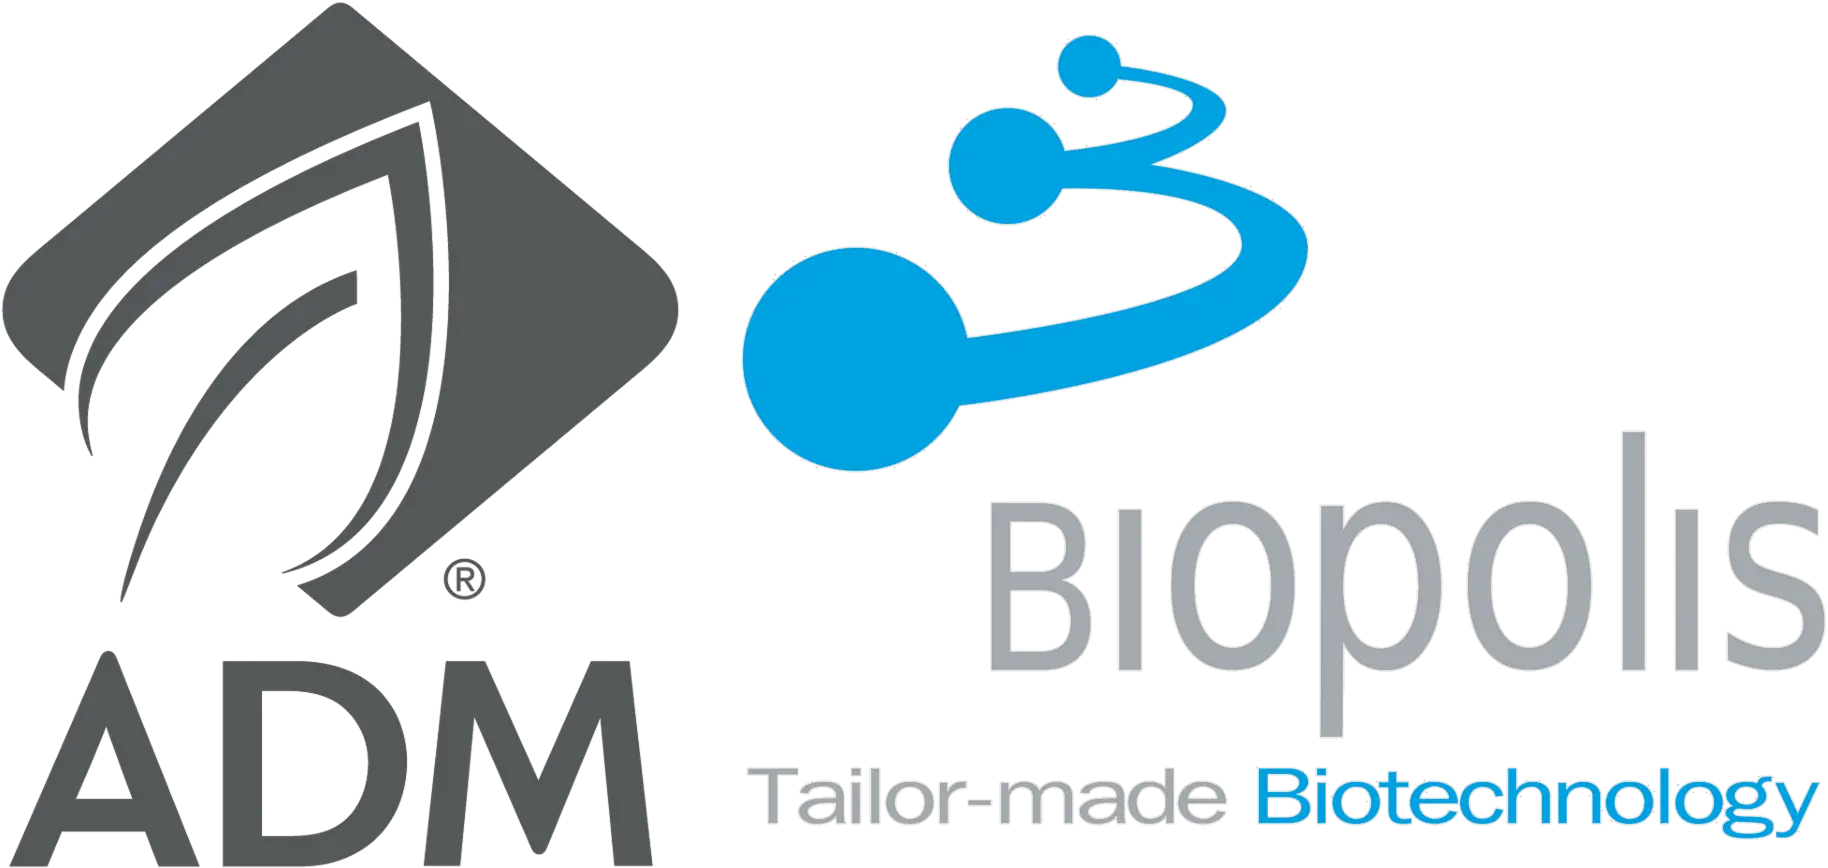 Adm Biopolis Vitafoods Europe 2020 New One Vertical Png Adm Logo